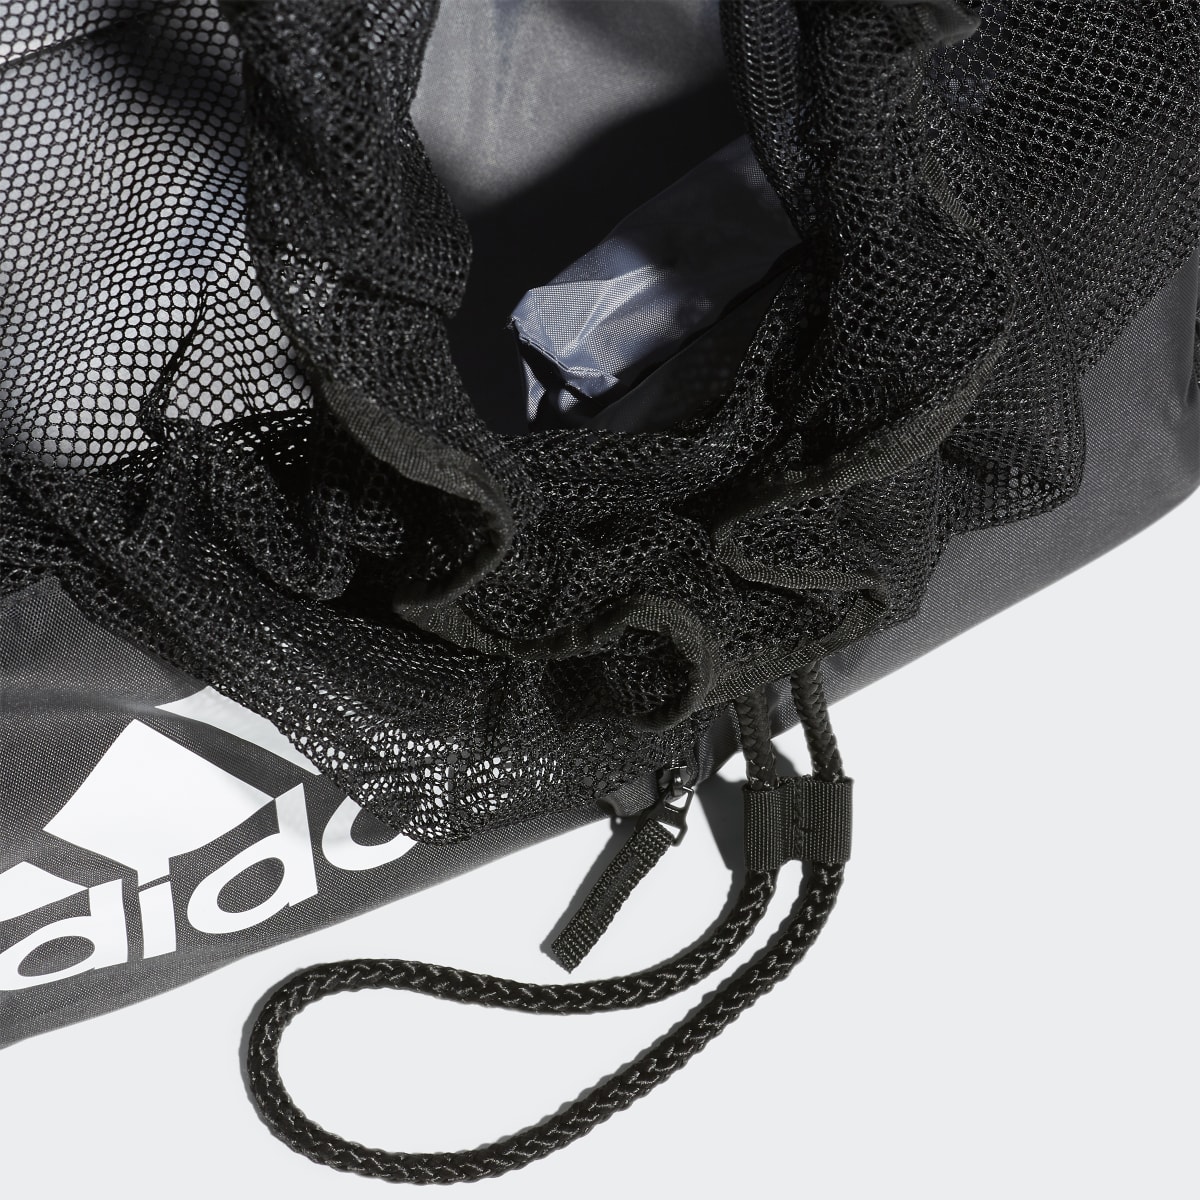 Adidas Stadium Ball Bag. 5